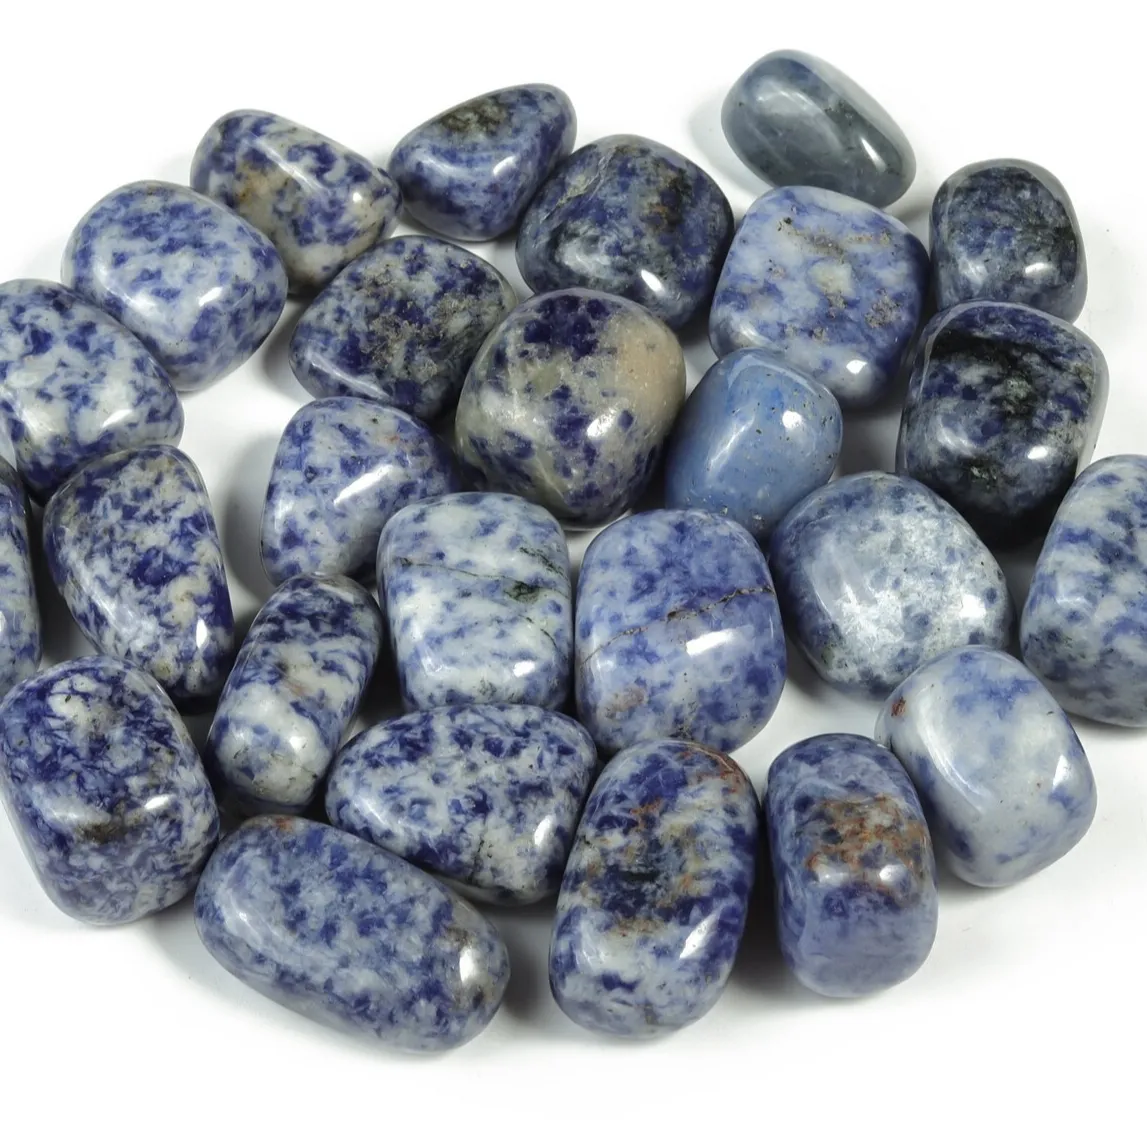 Wholesale High Quality Hot-Selling Blue Spot Jasper Tumbled Stone Handmade Healing Crystal Tumble Stone Christmas Gifts Alfazal